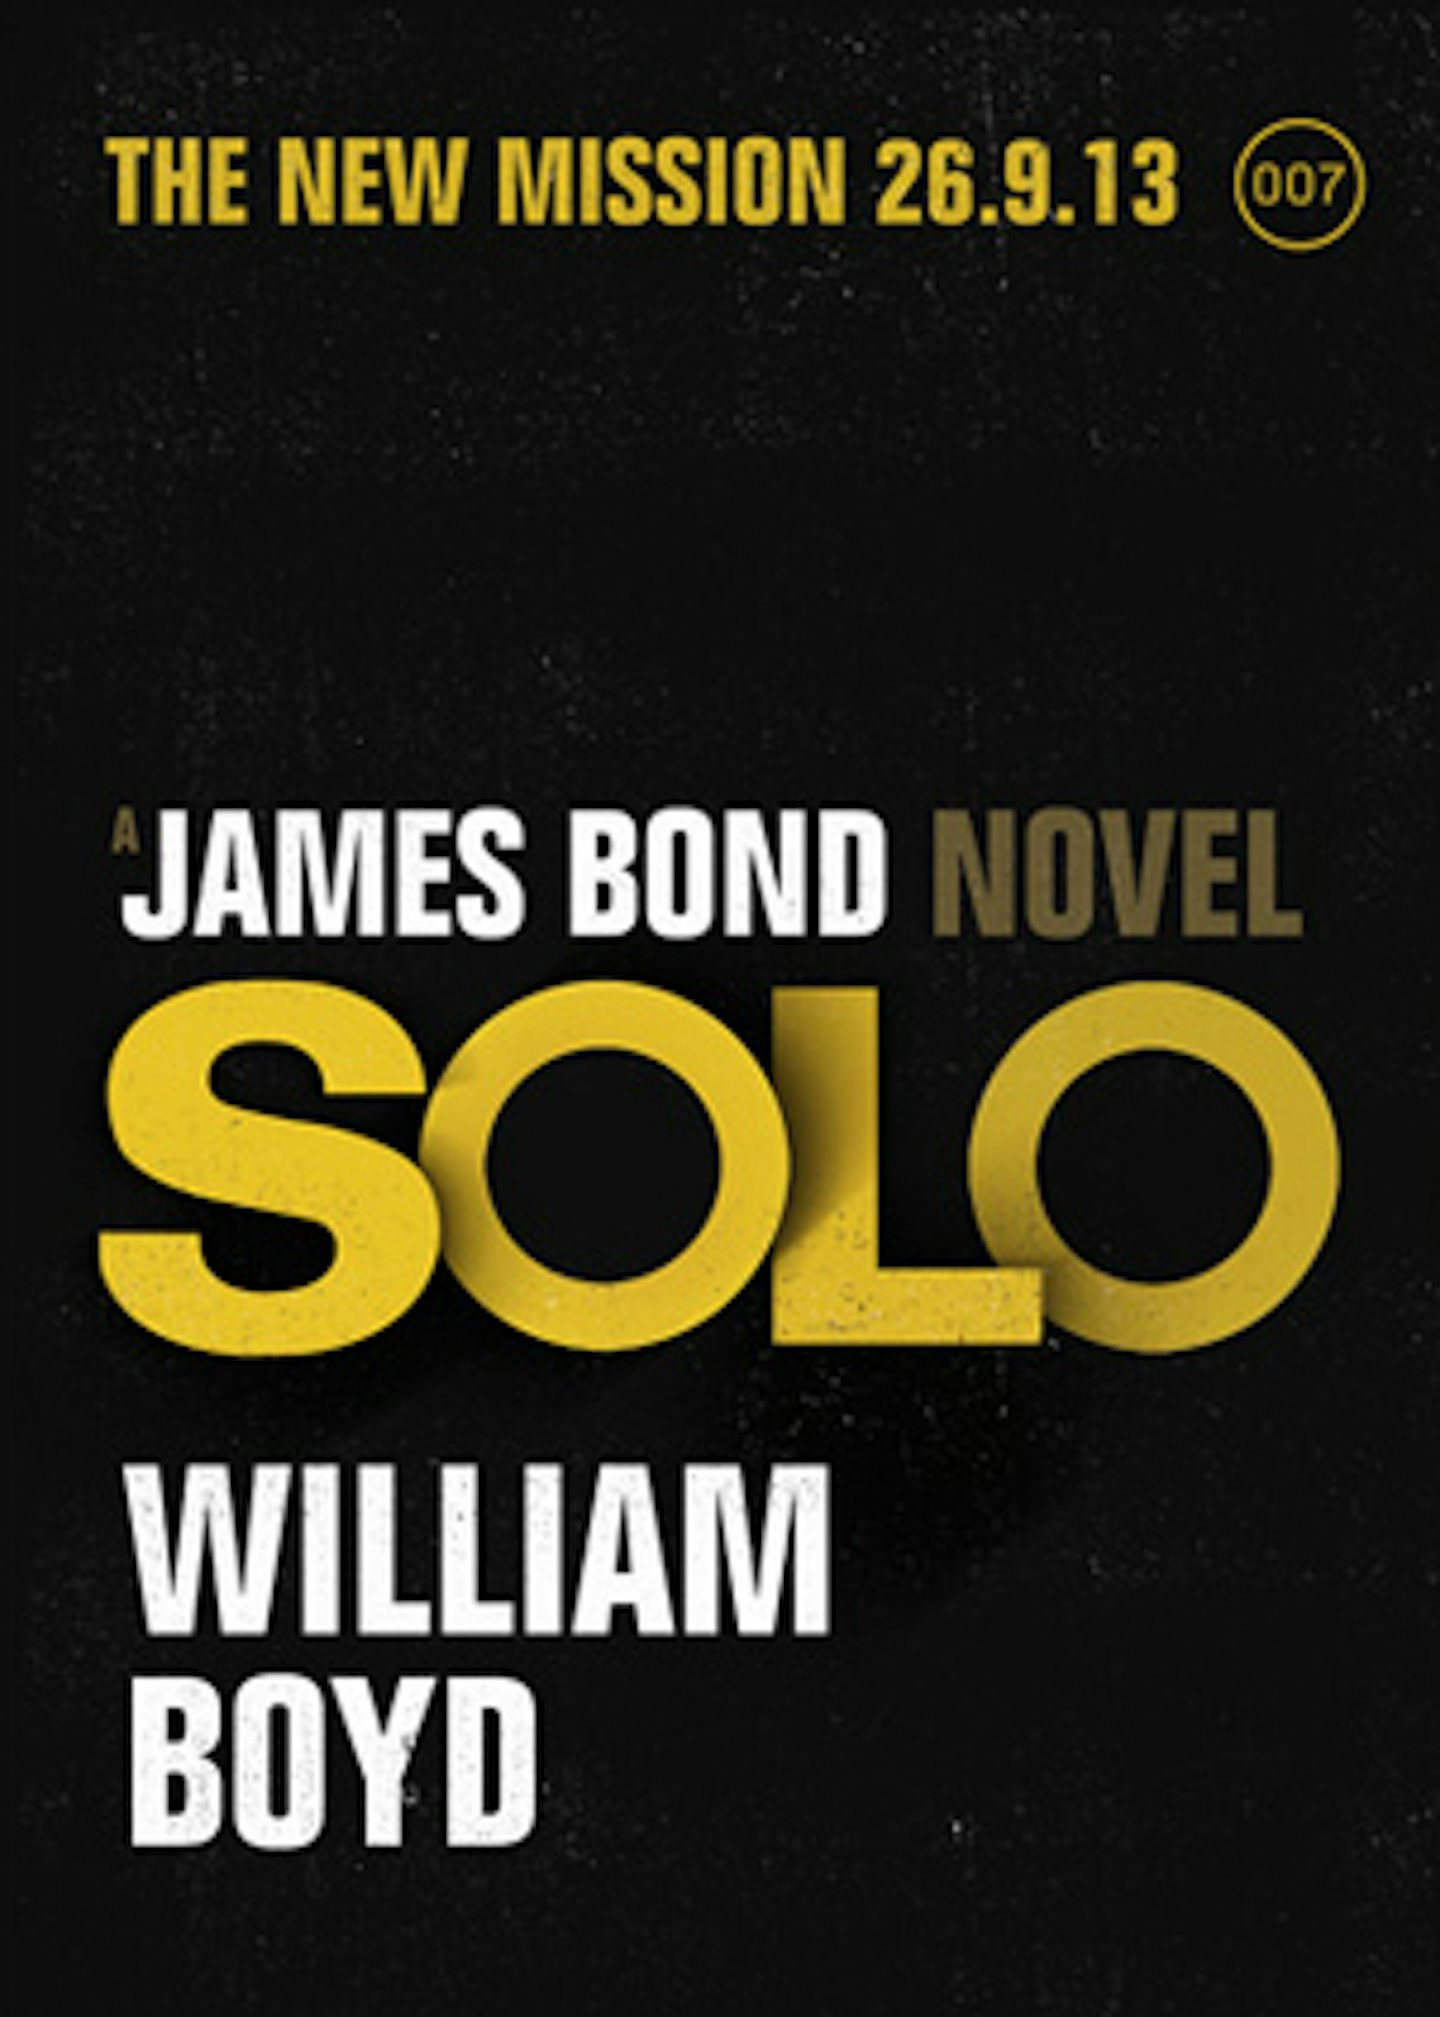 Title Of Next James Bond Novel Revealed